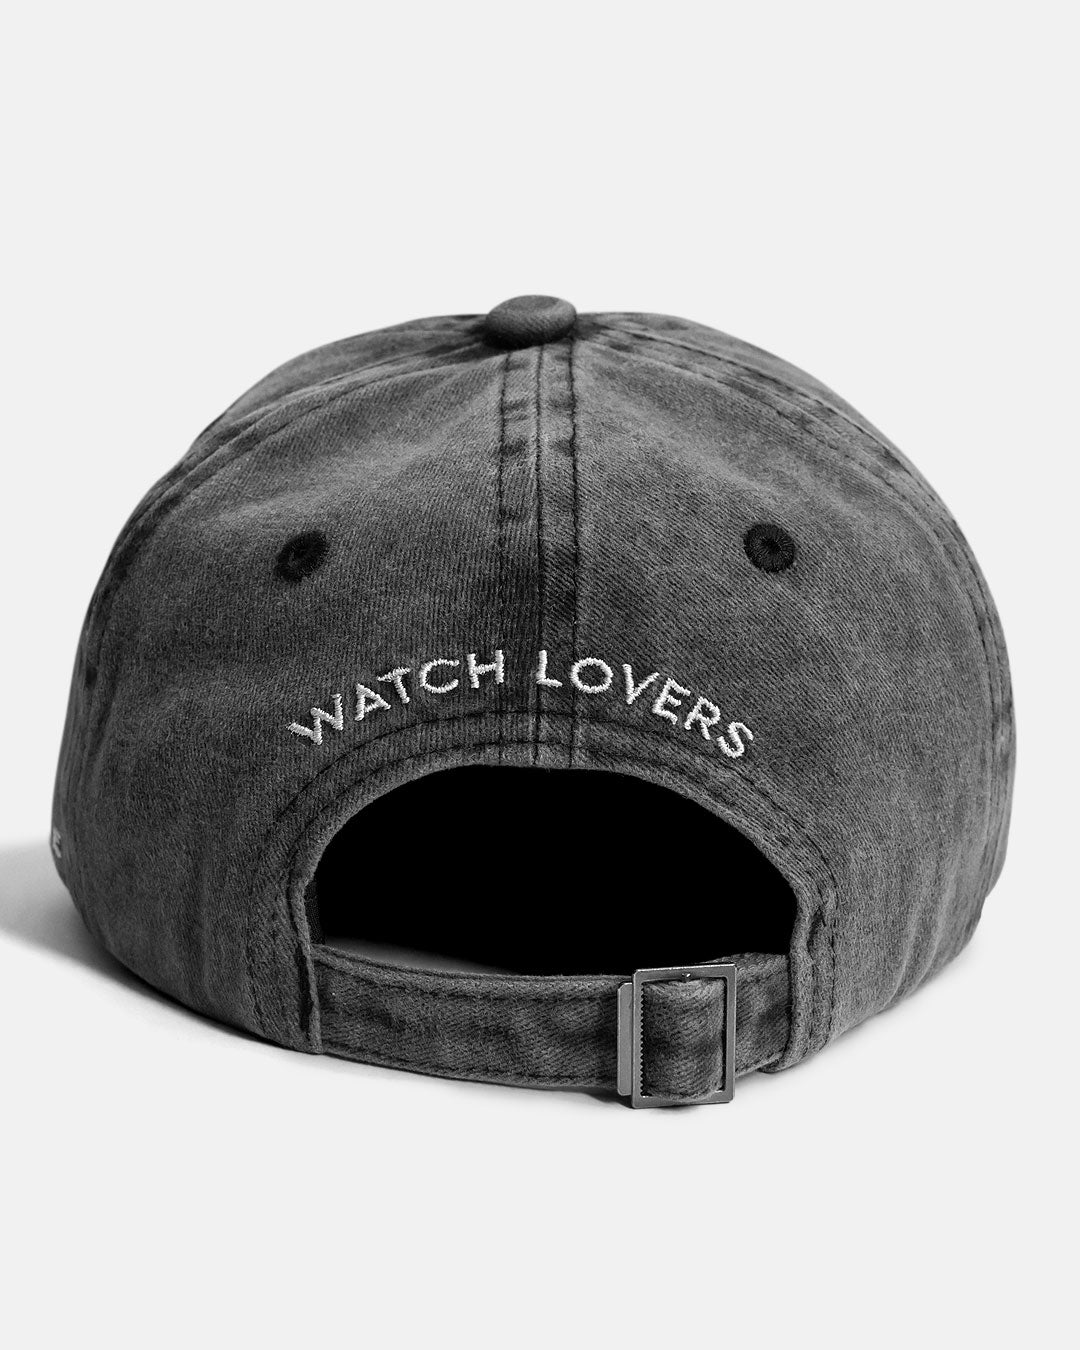 Corporative Watch Lovers Cap